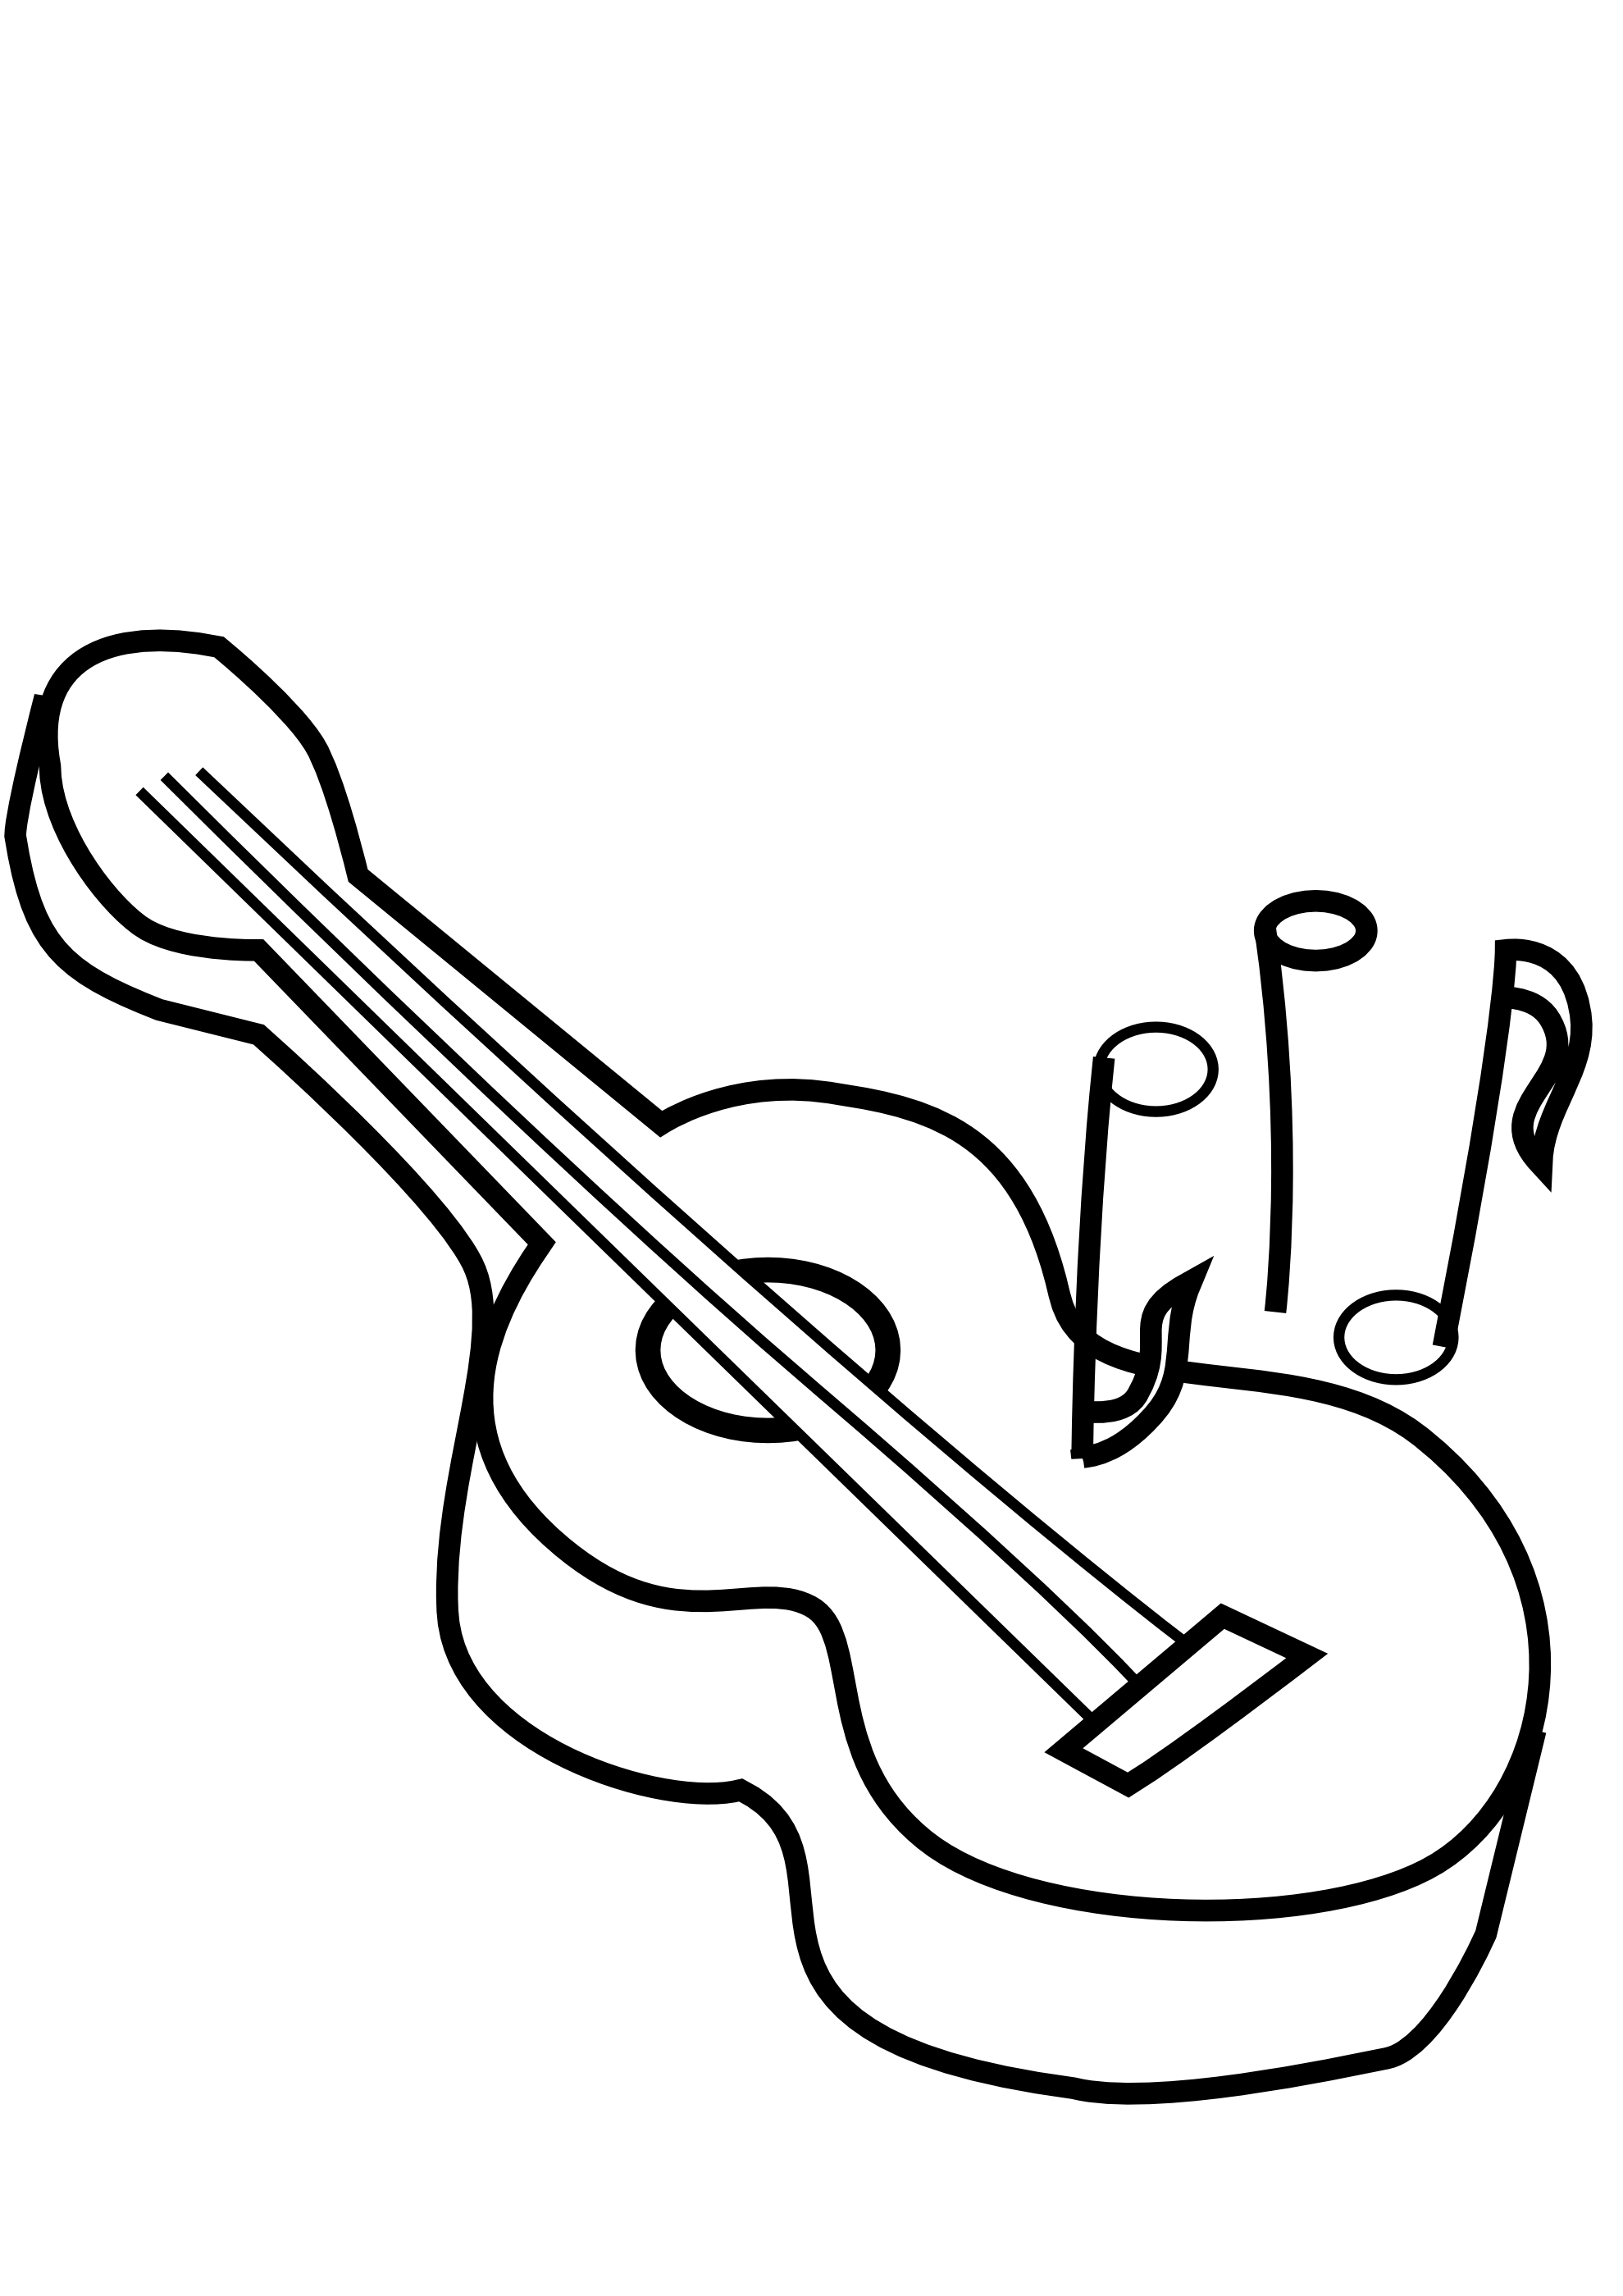 Guitar clip art black and white 